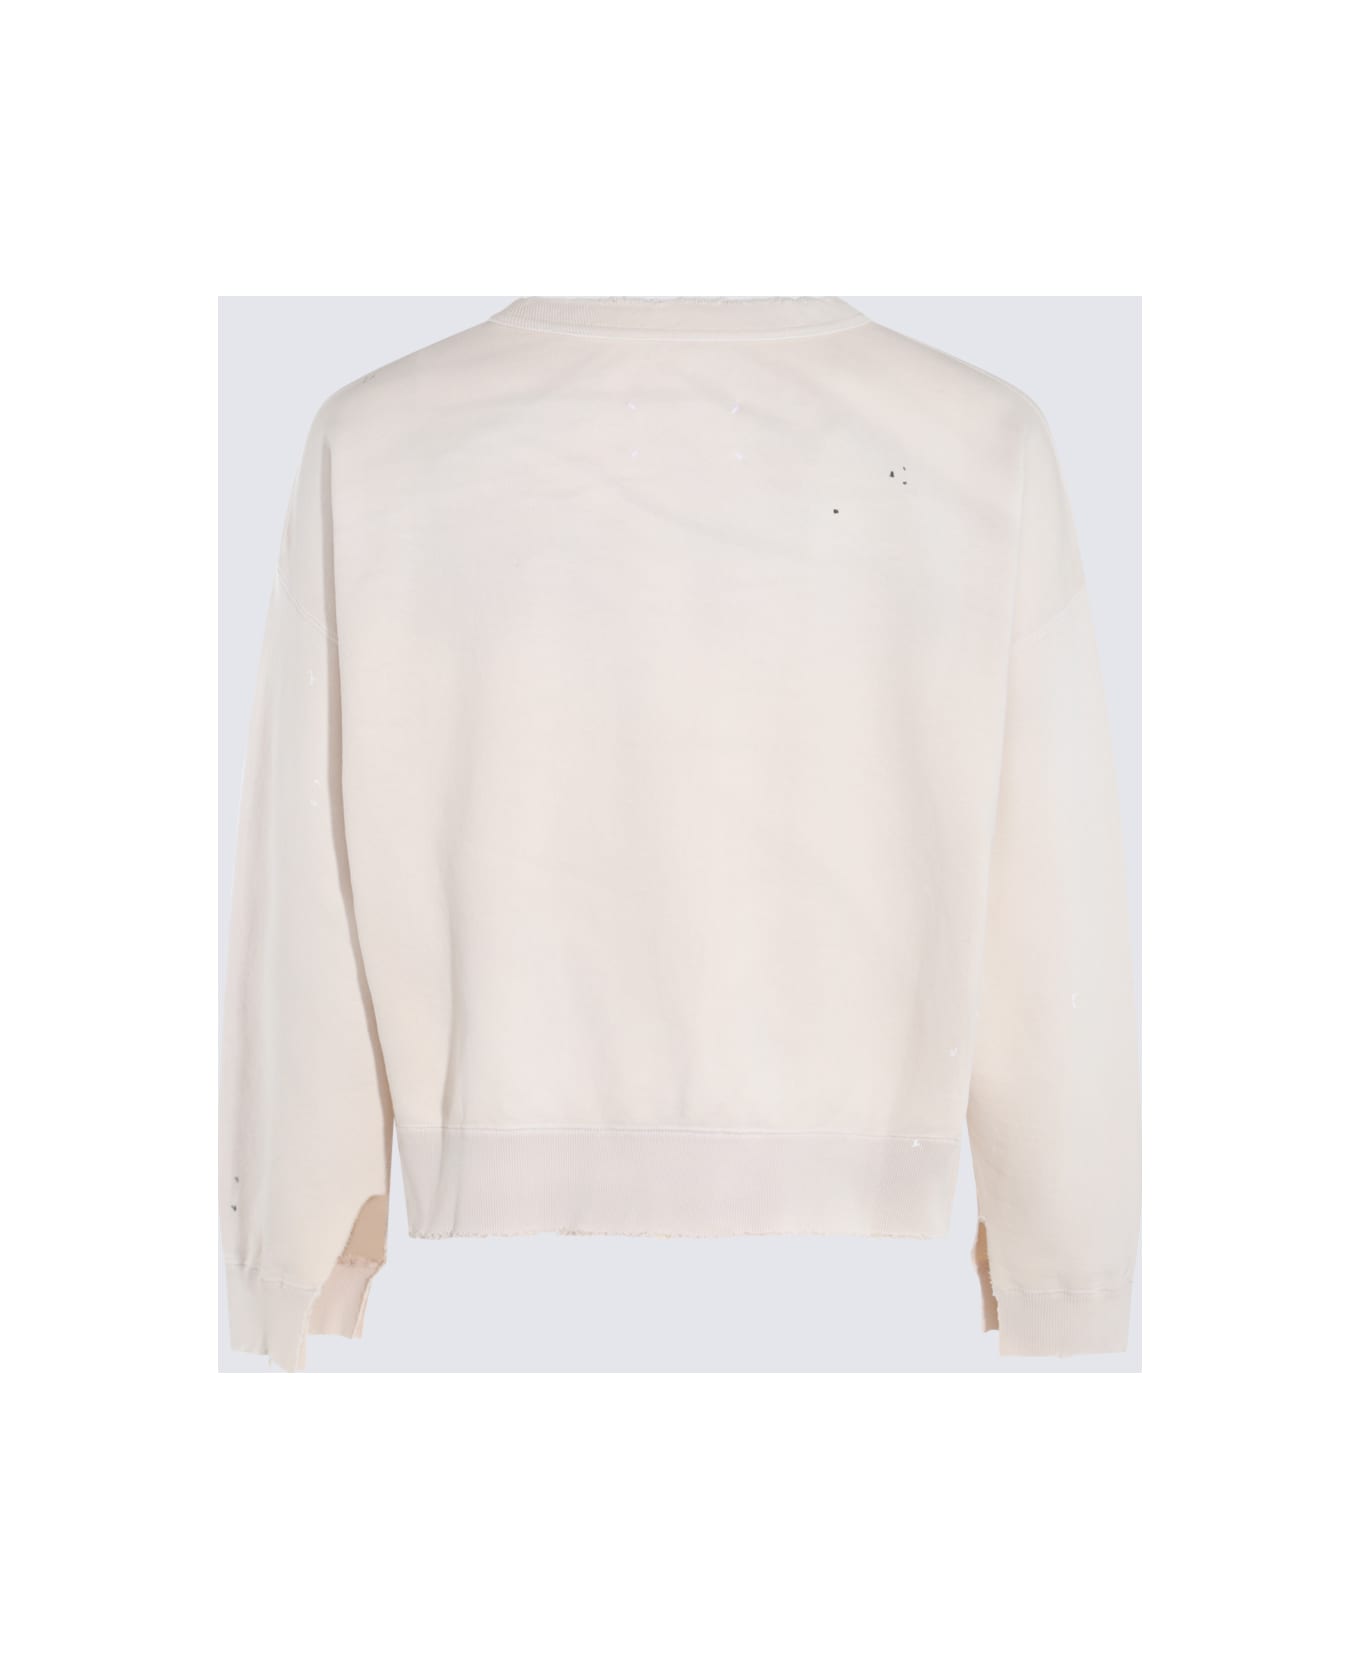 Maison Margiela Cream Cotton Sweatshirt - White